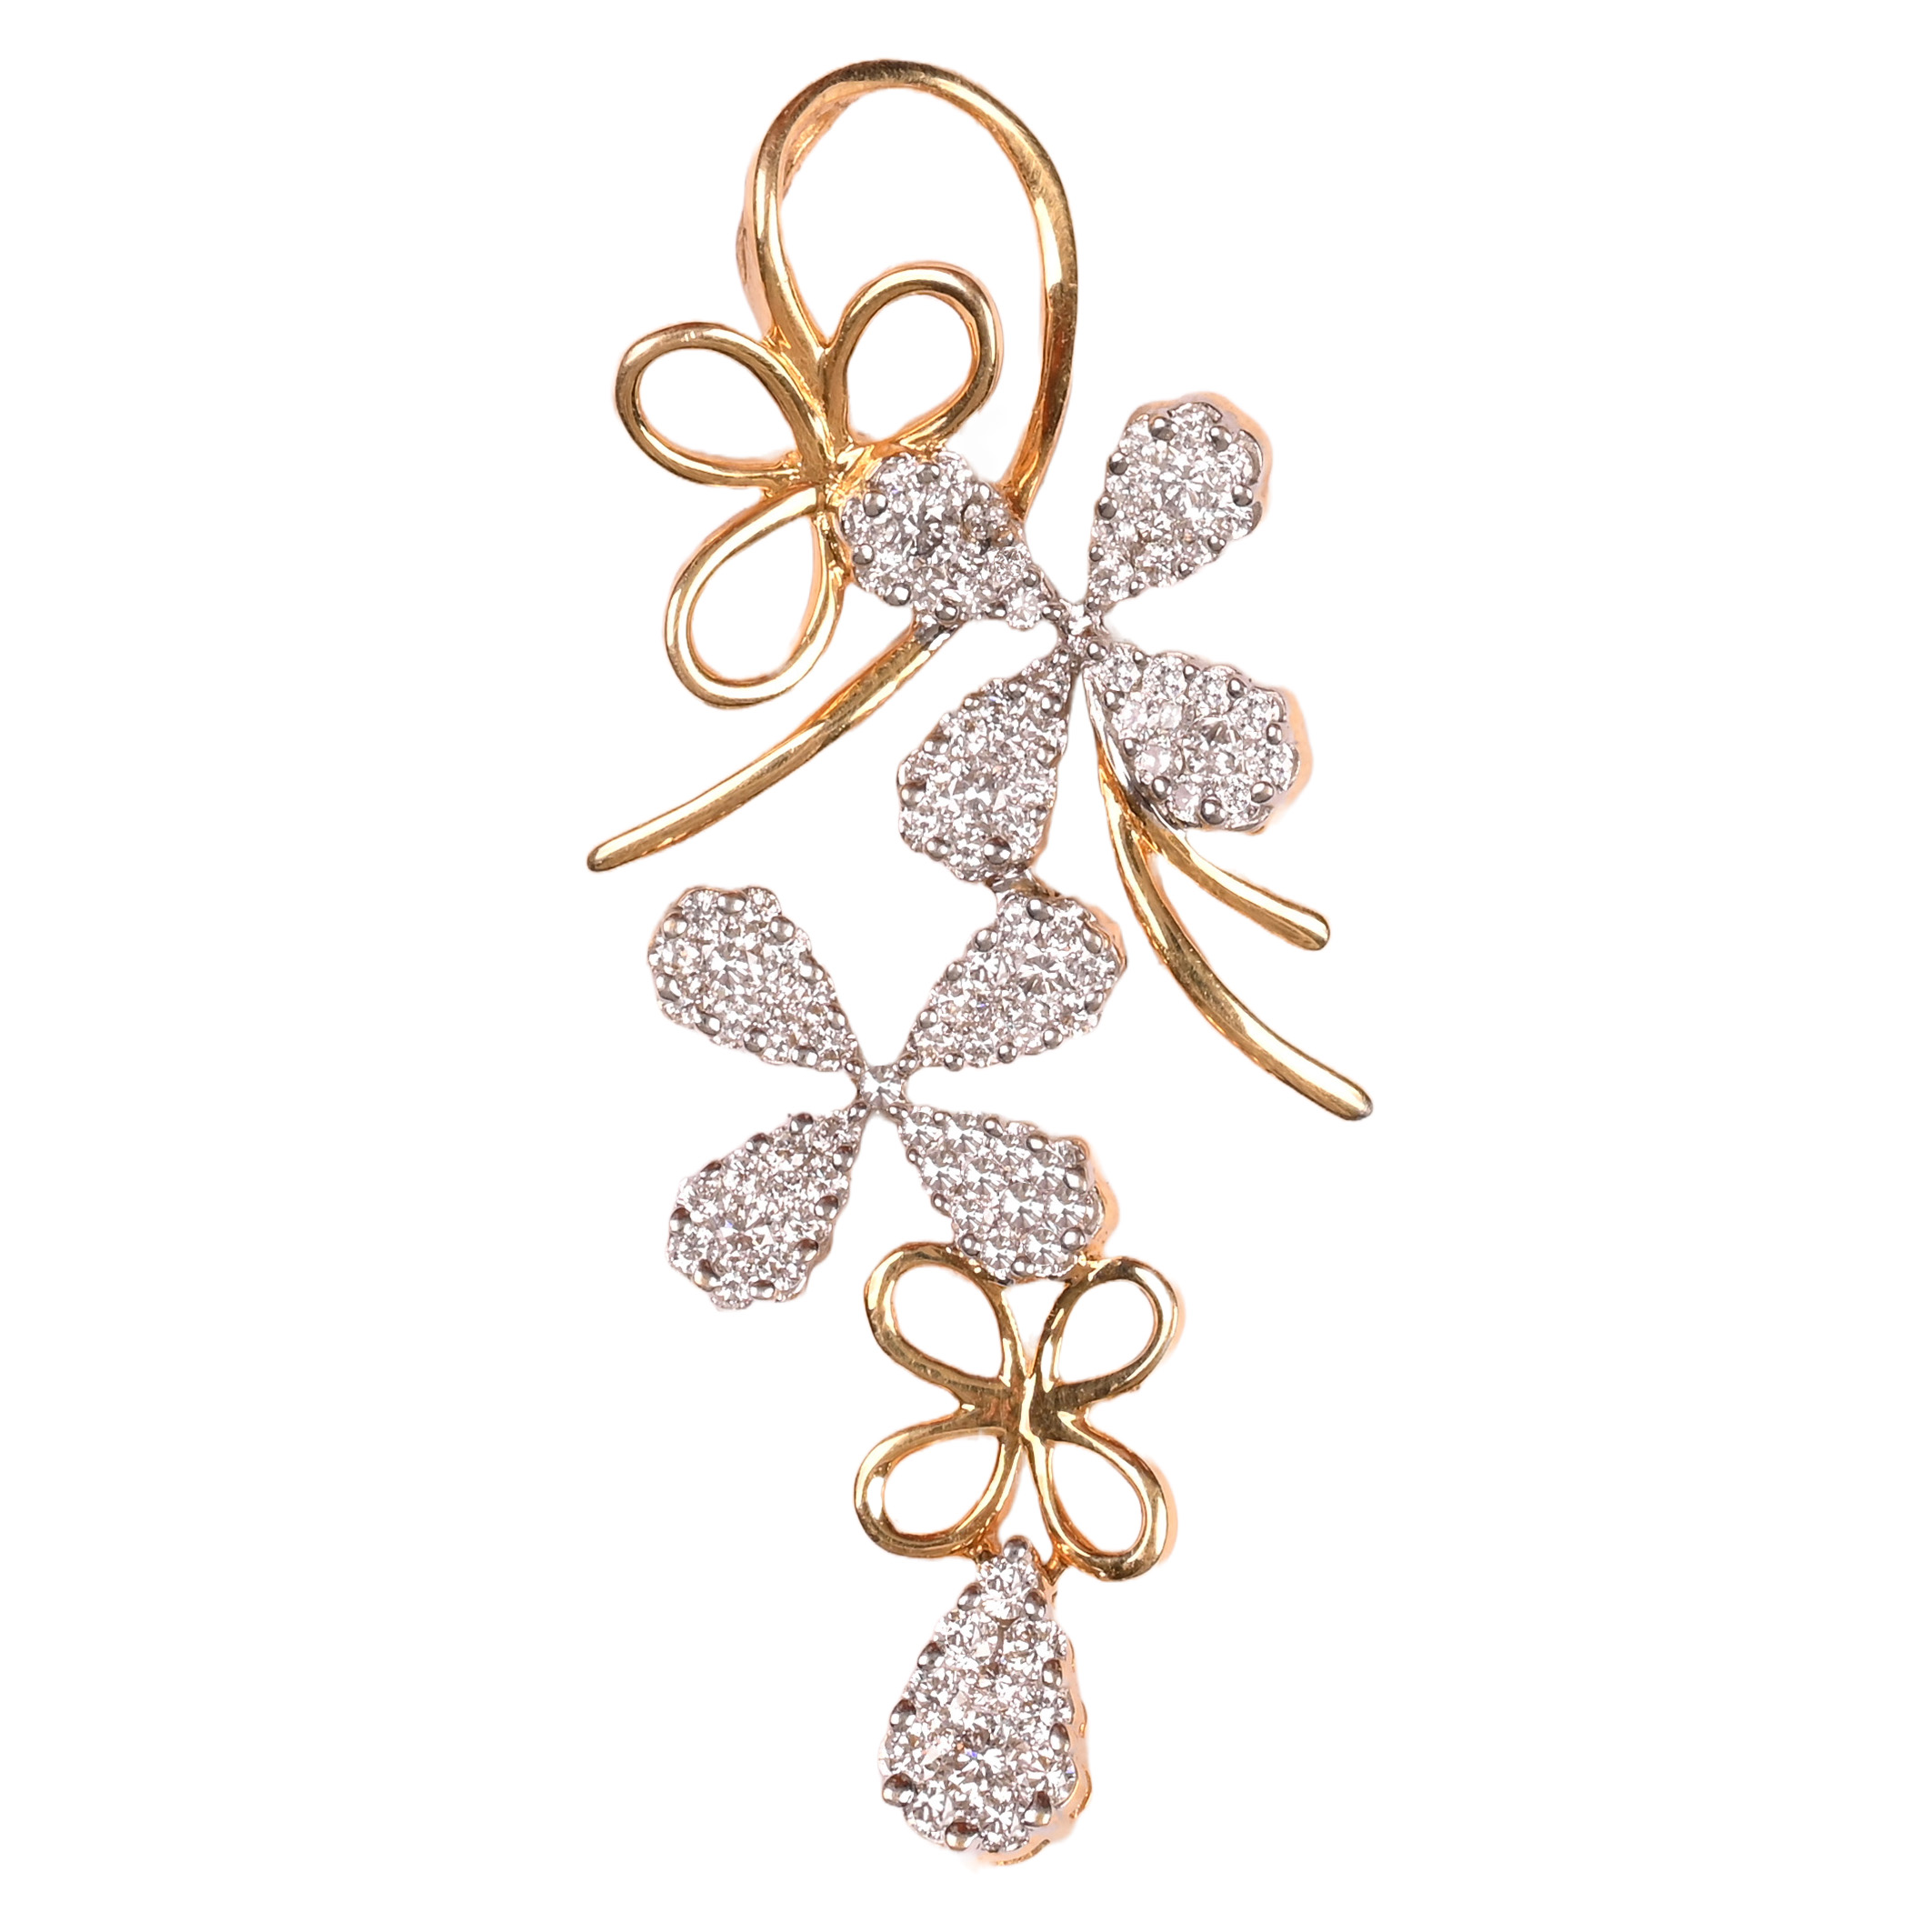 Hira Panna 18k Solid Gold Diamond Pendant (LOCKET) - Hira Panna Jewellers